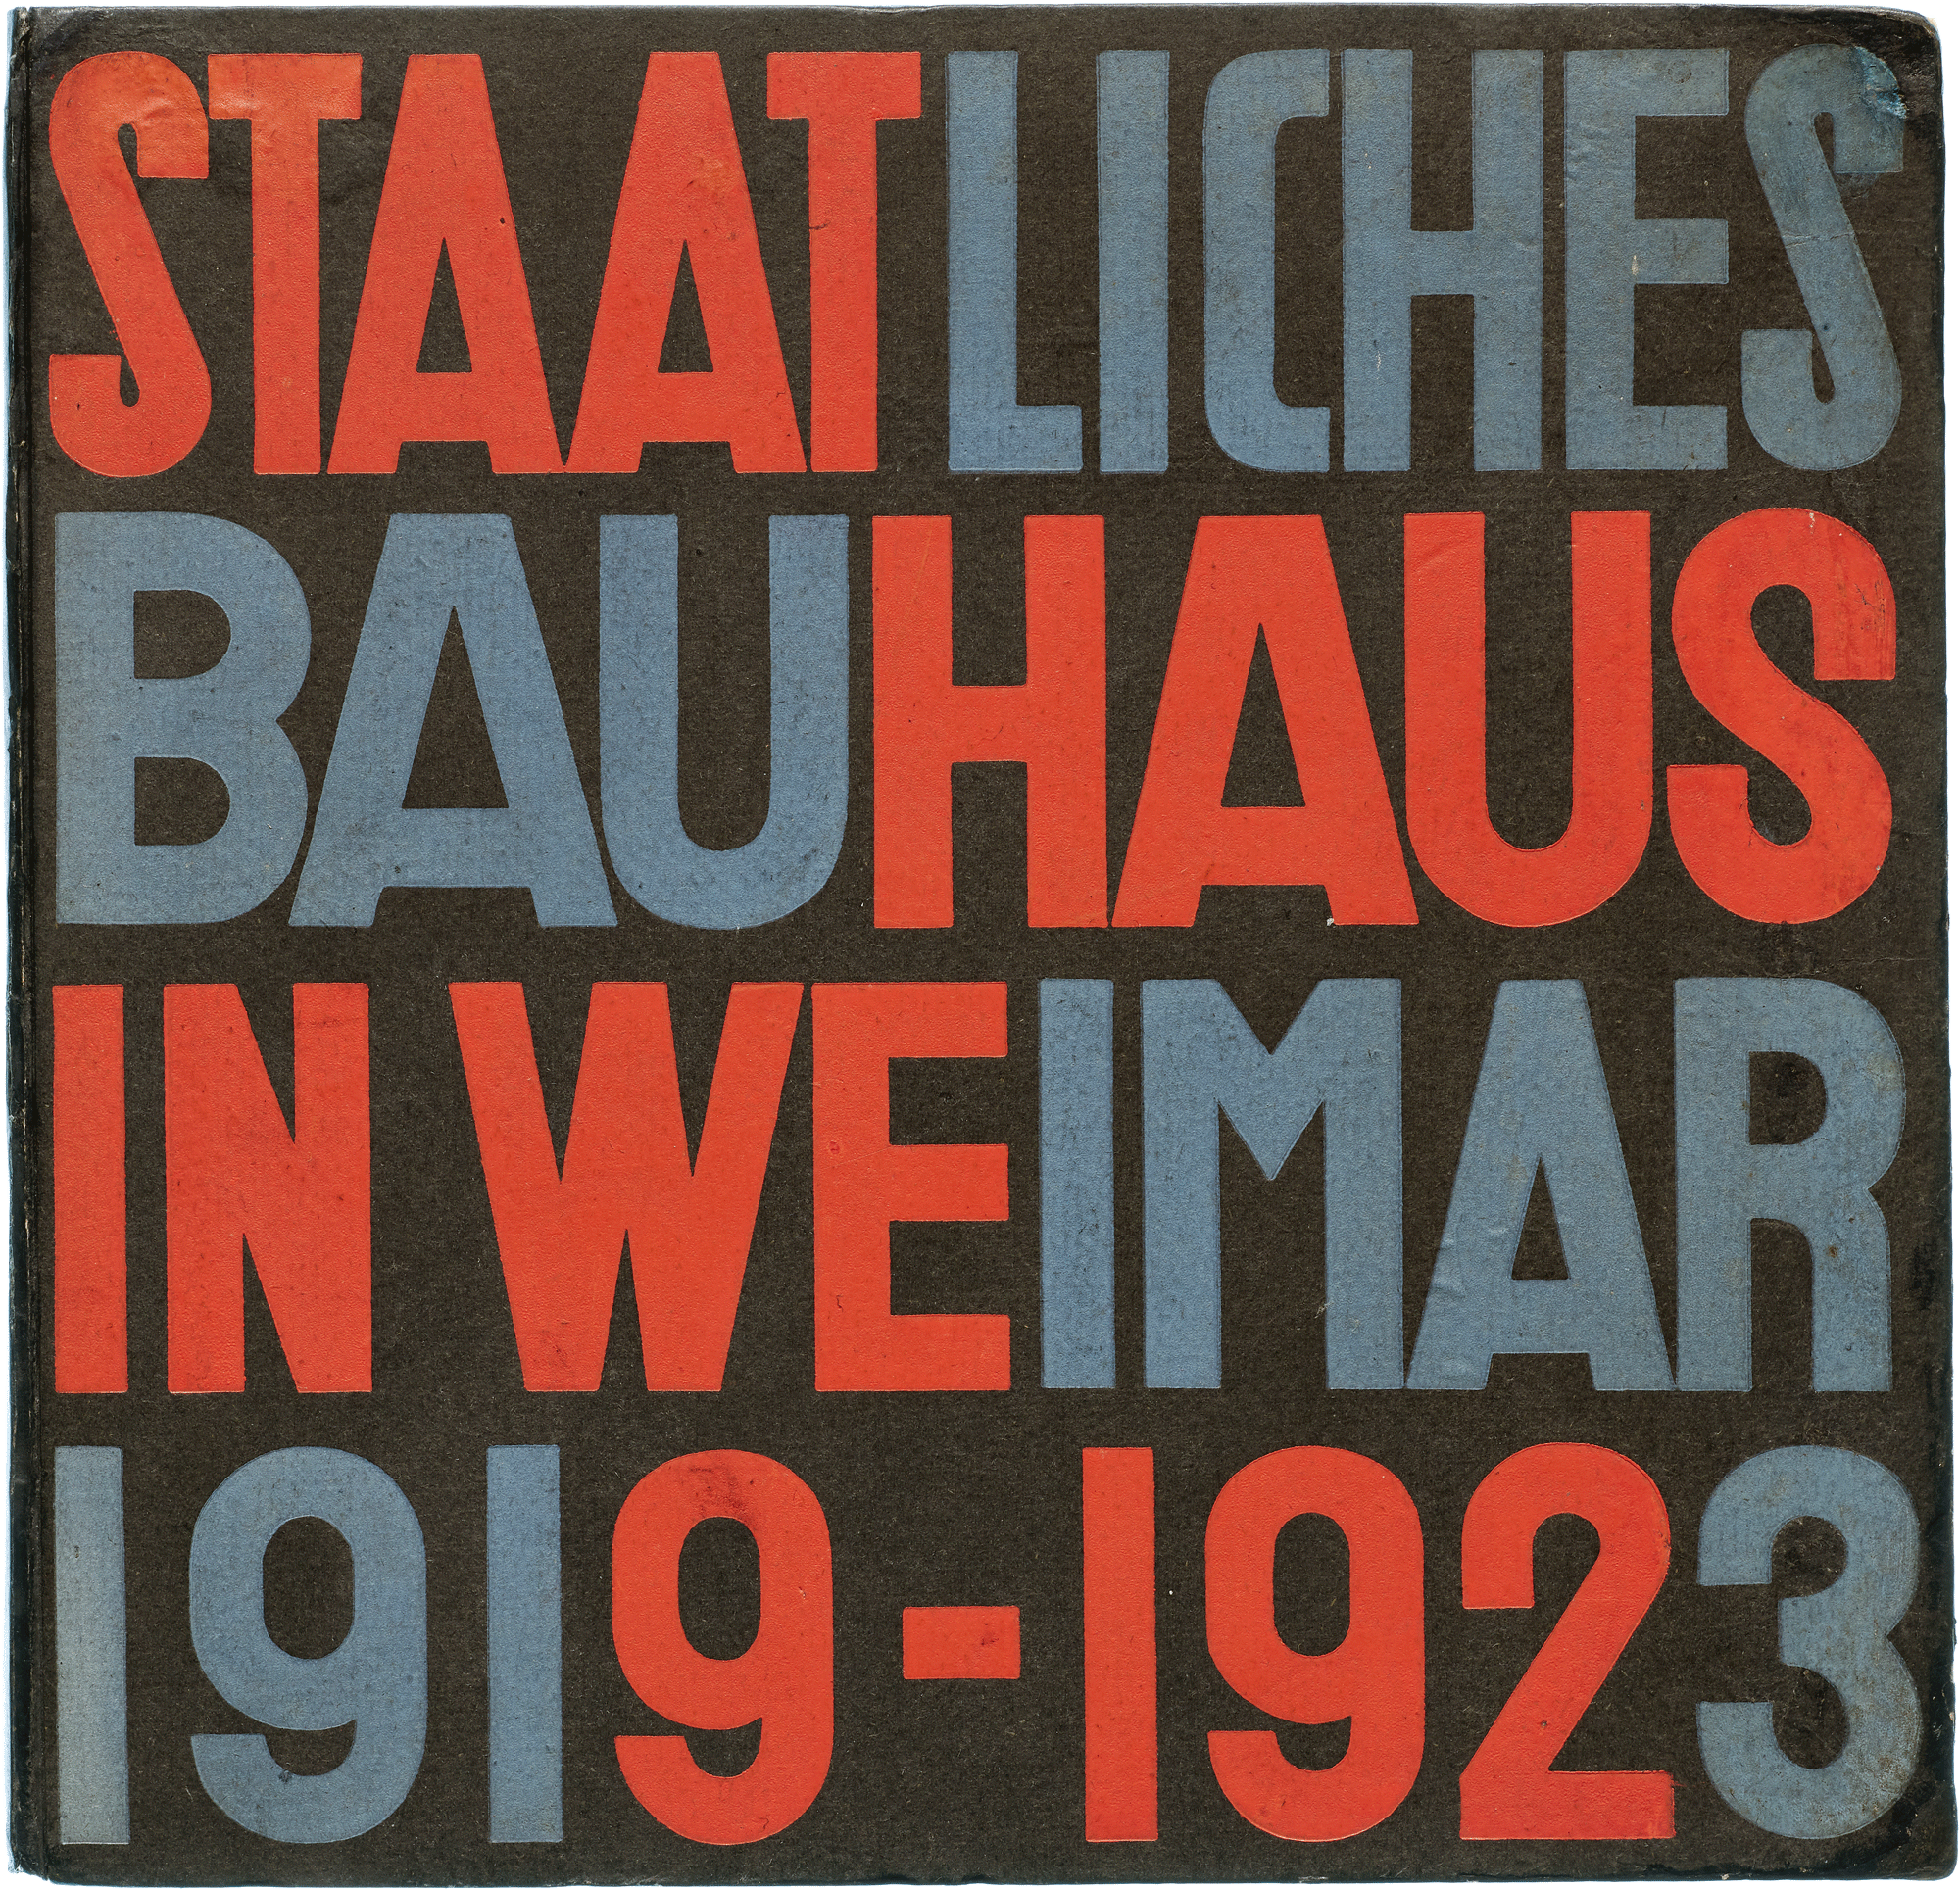 1923 exhibition catalog